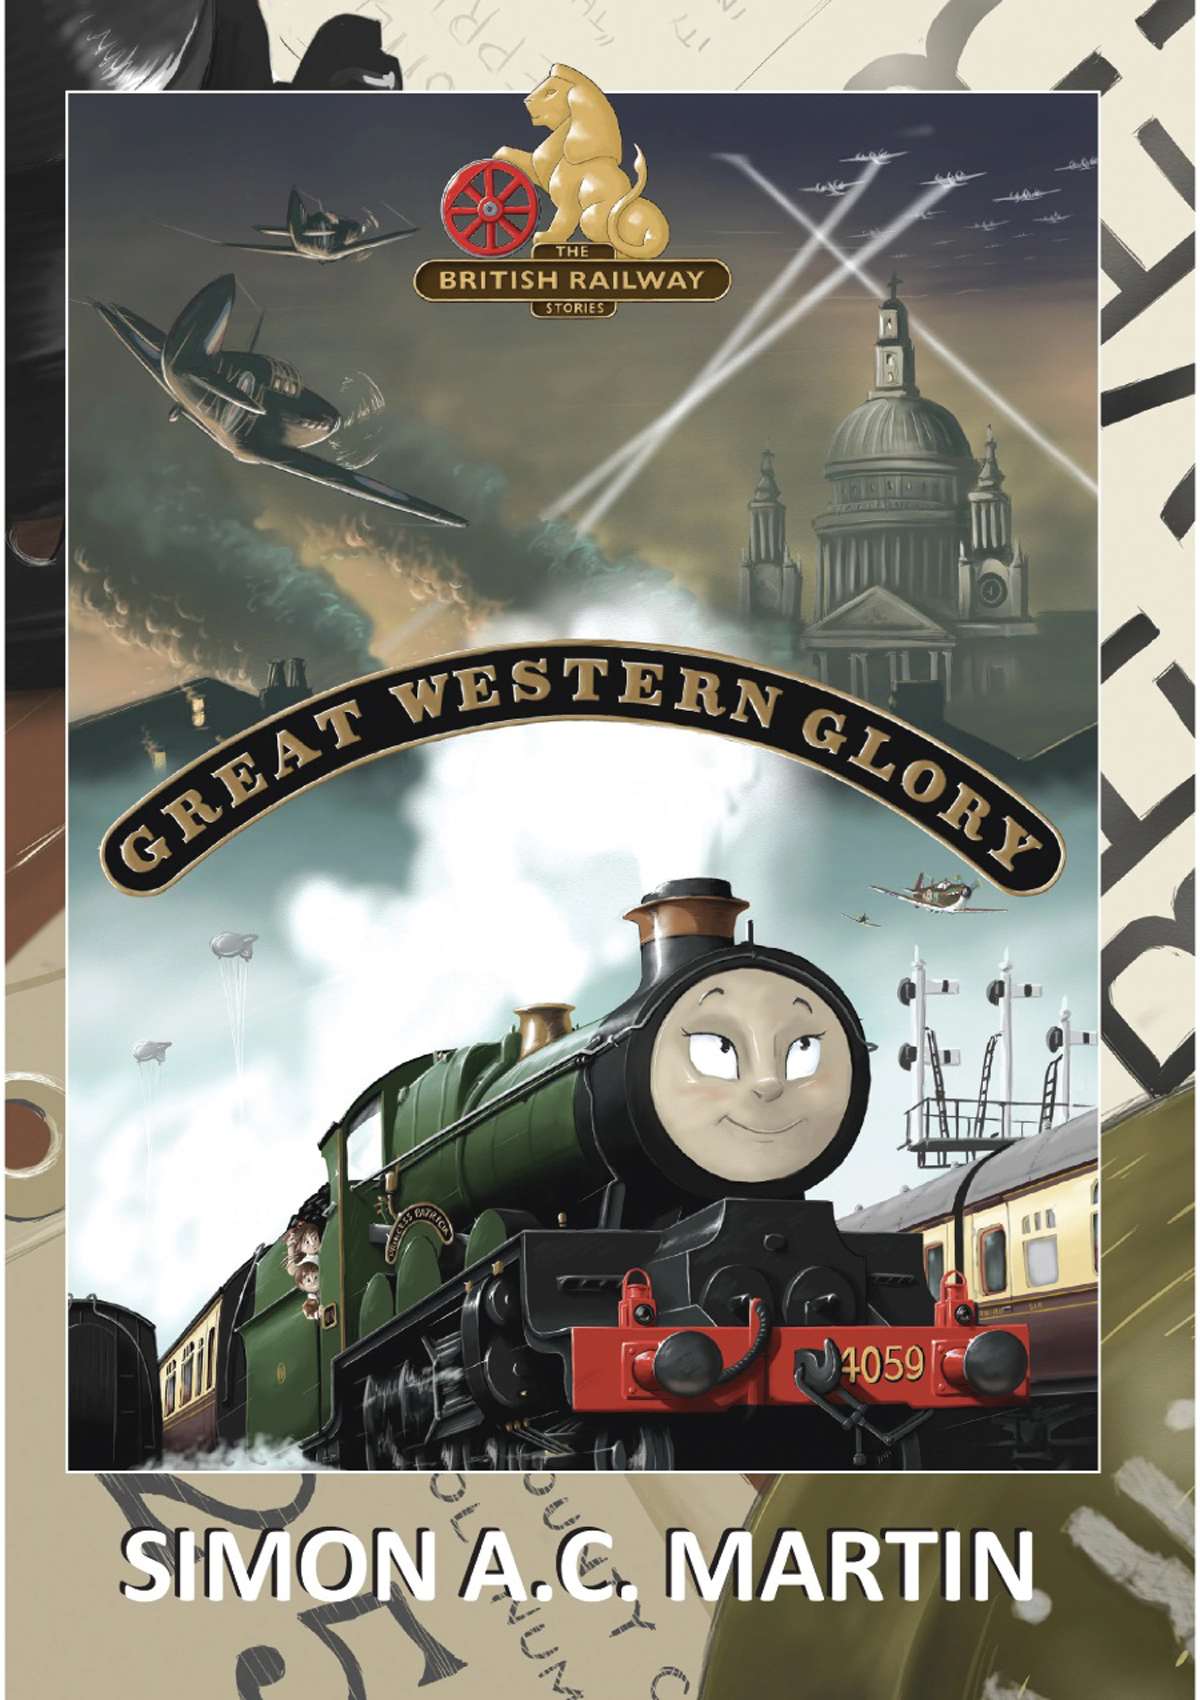 The British Railway Stories 2 - 
Great Western Glory